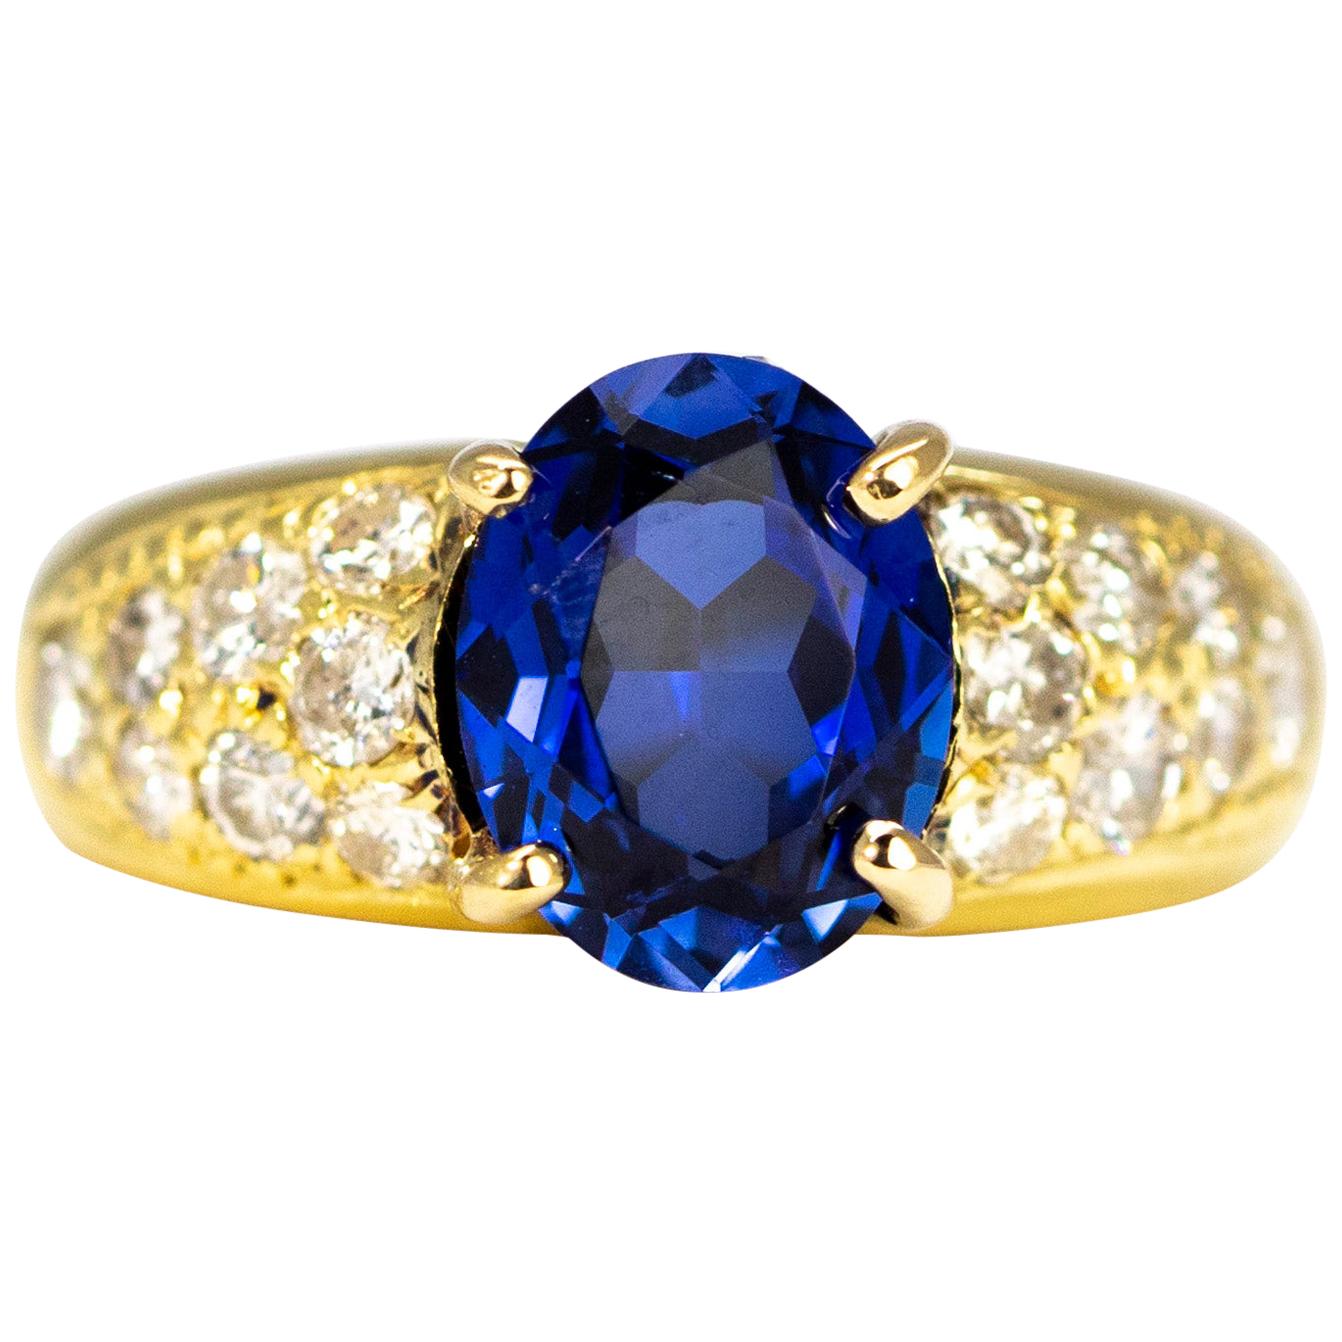 Vintage Sapphire and Diamond 18 Carat Gold Ring